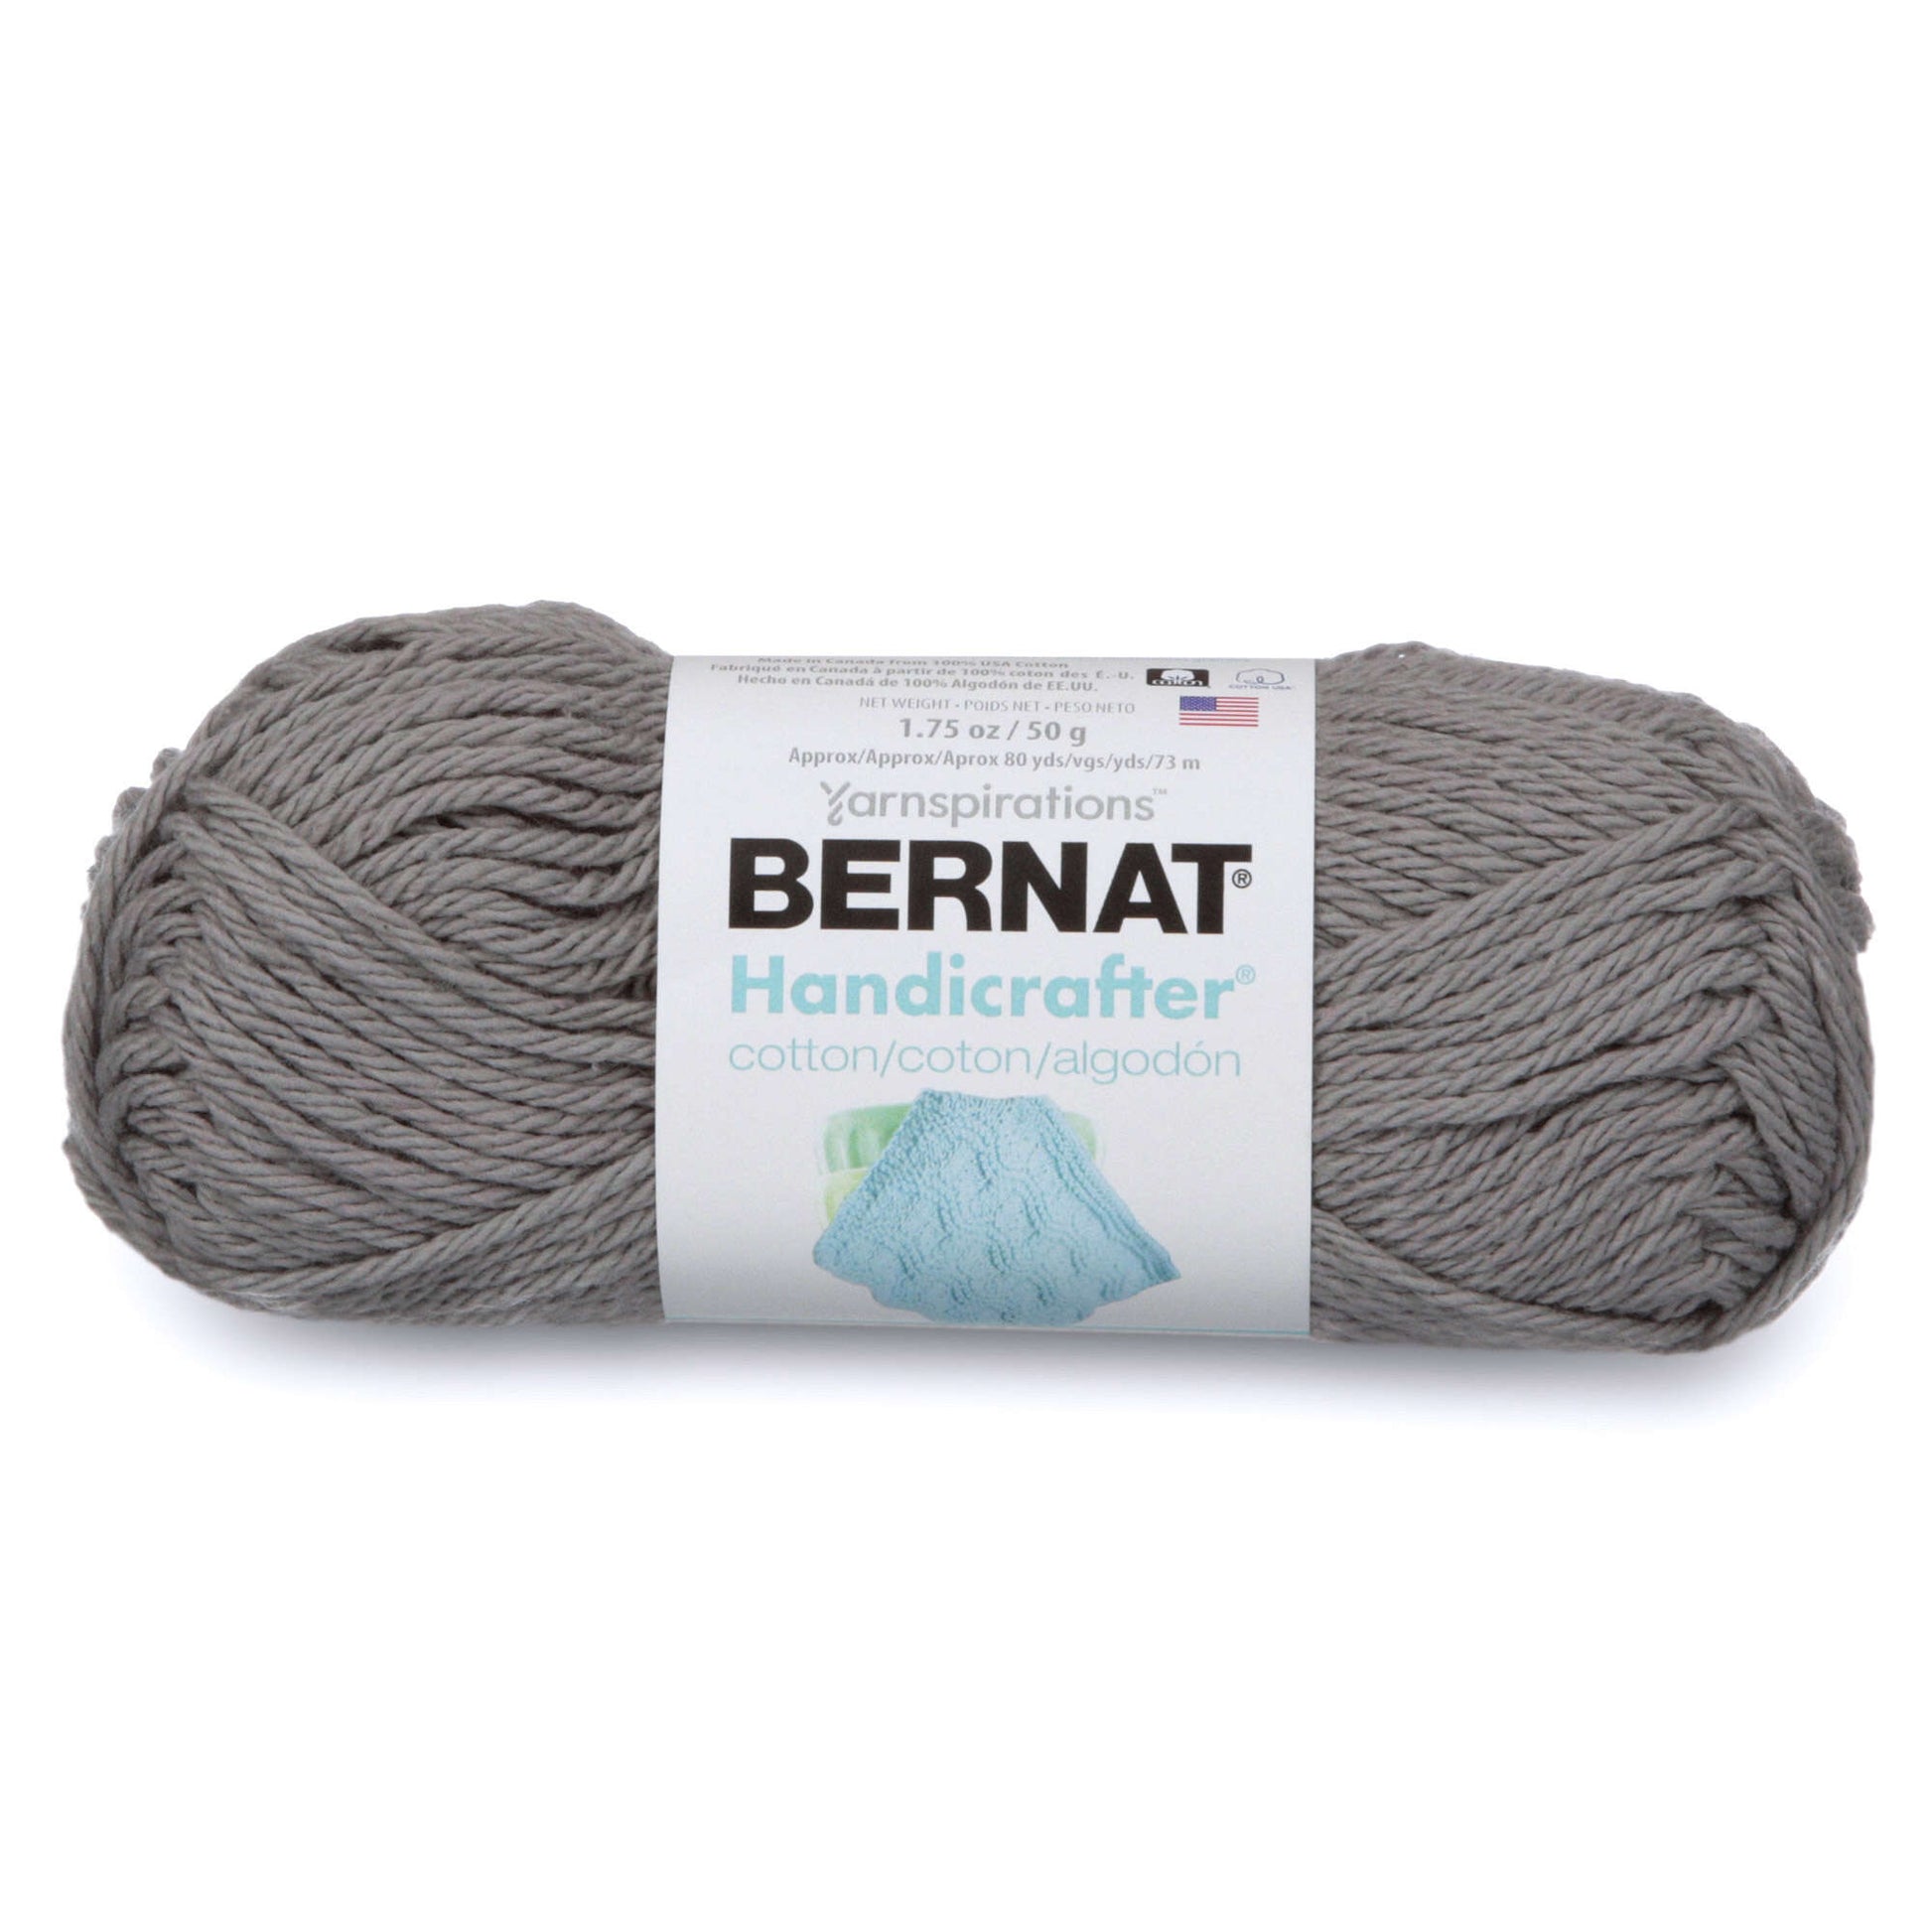 Bernat Handicrafter Cotton Yarn Overcast